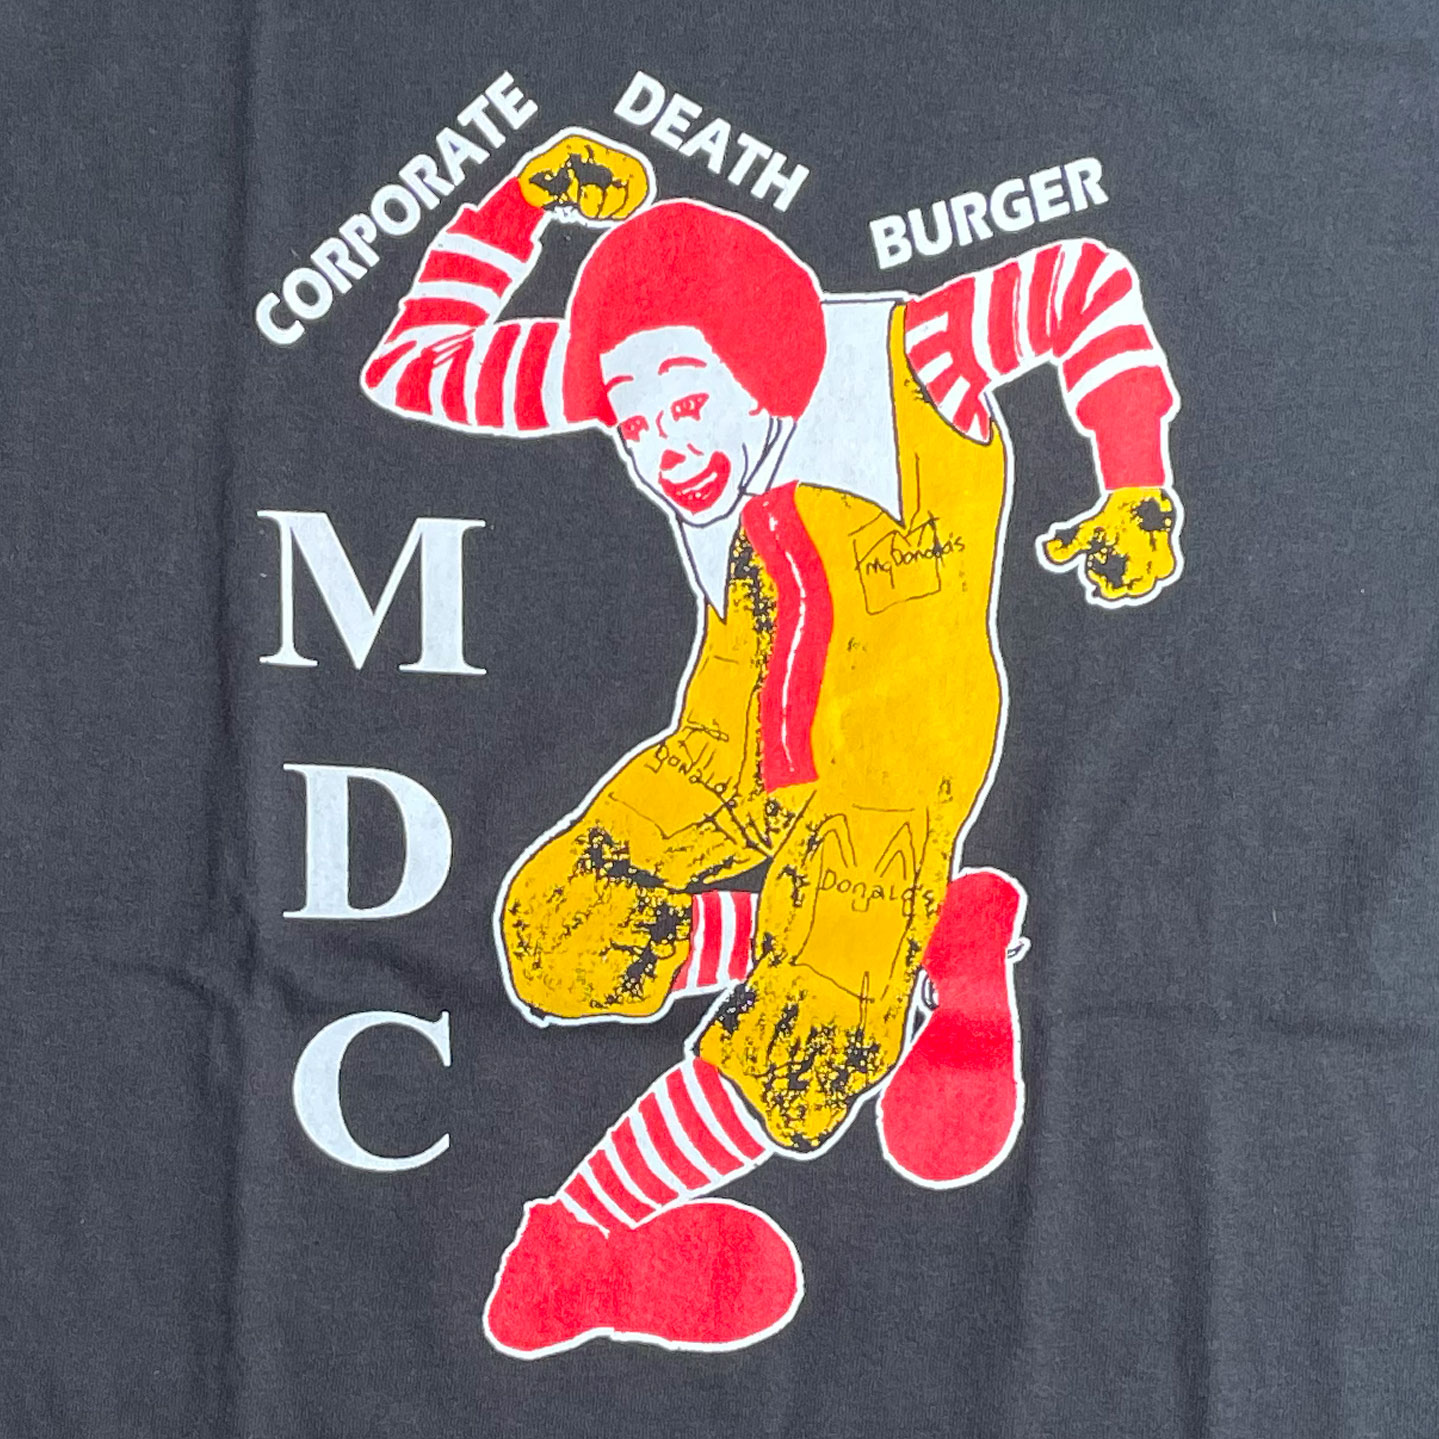 MDC Tシャツ CORPORATE DEATH BURGER 2